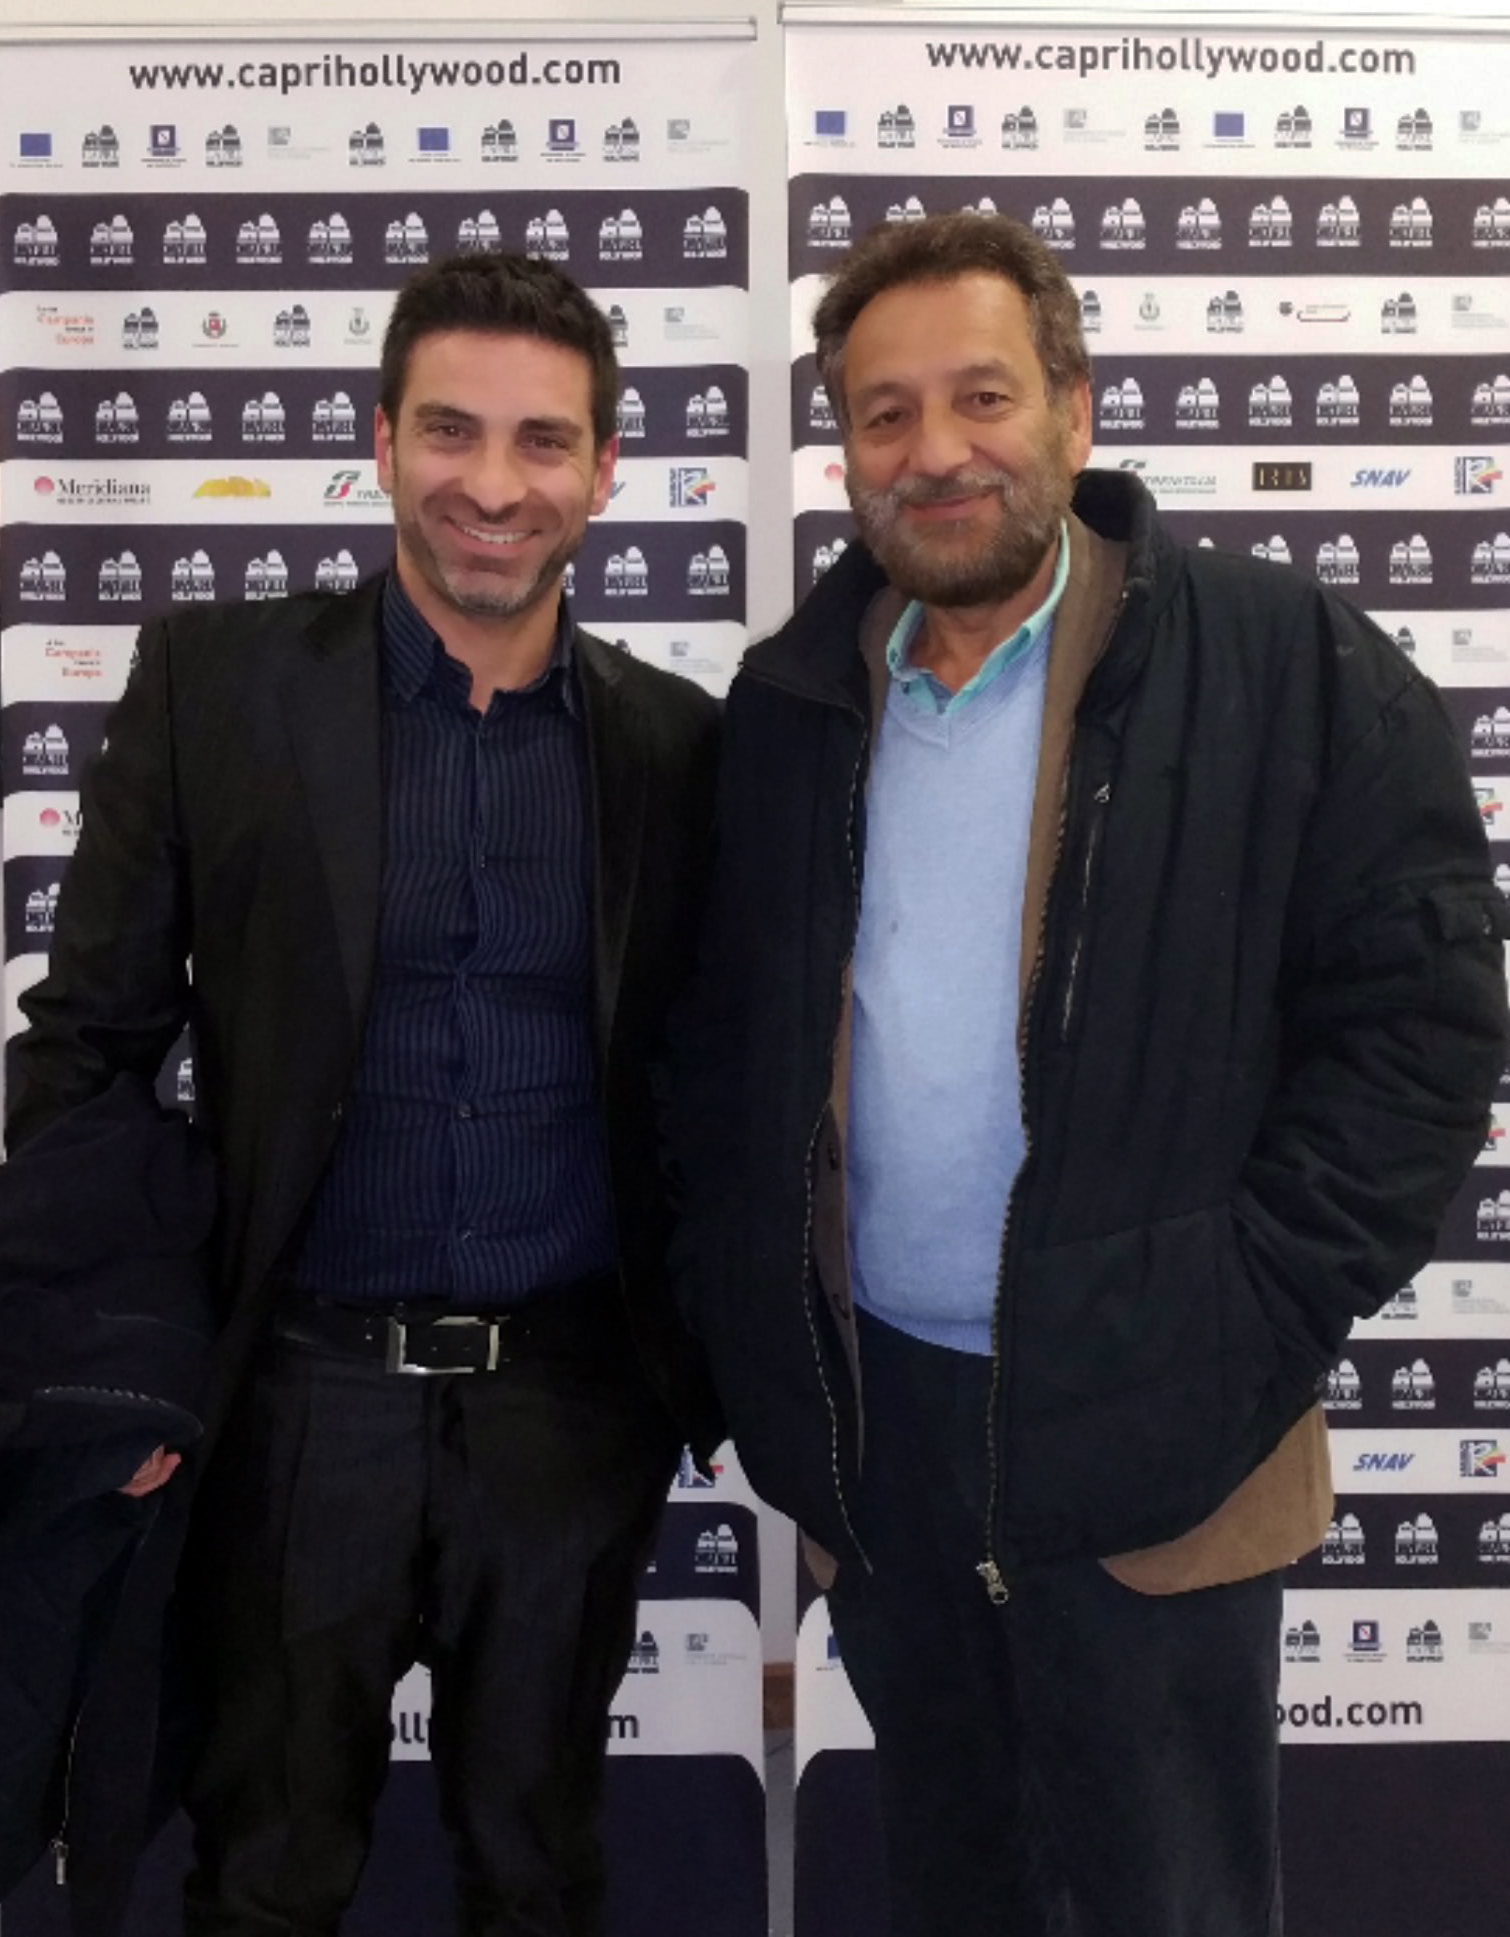 Alessandro Cuomo and Shekhar Kapur - Capri Hollywood International Festival december 2014.